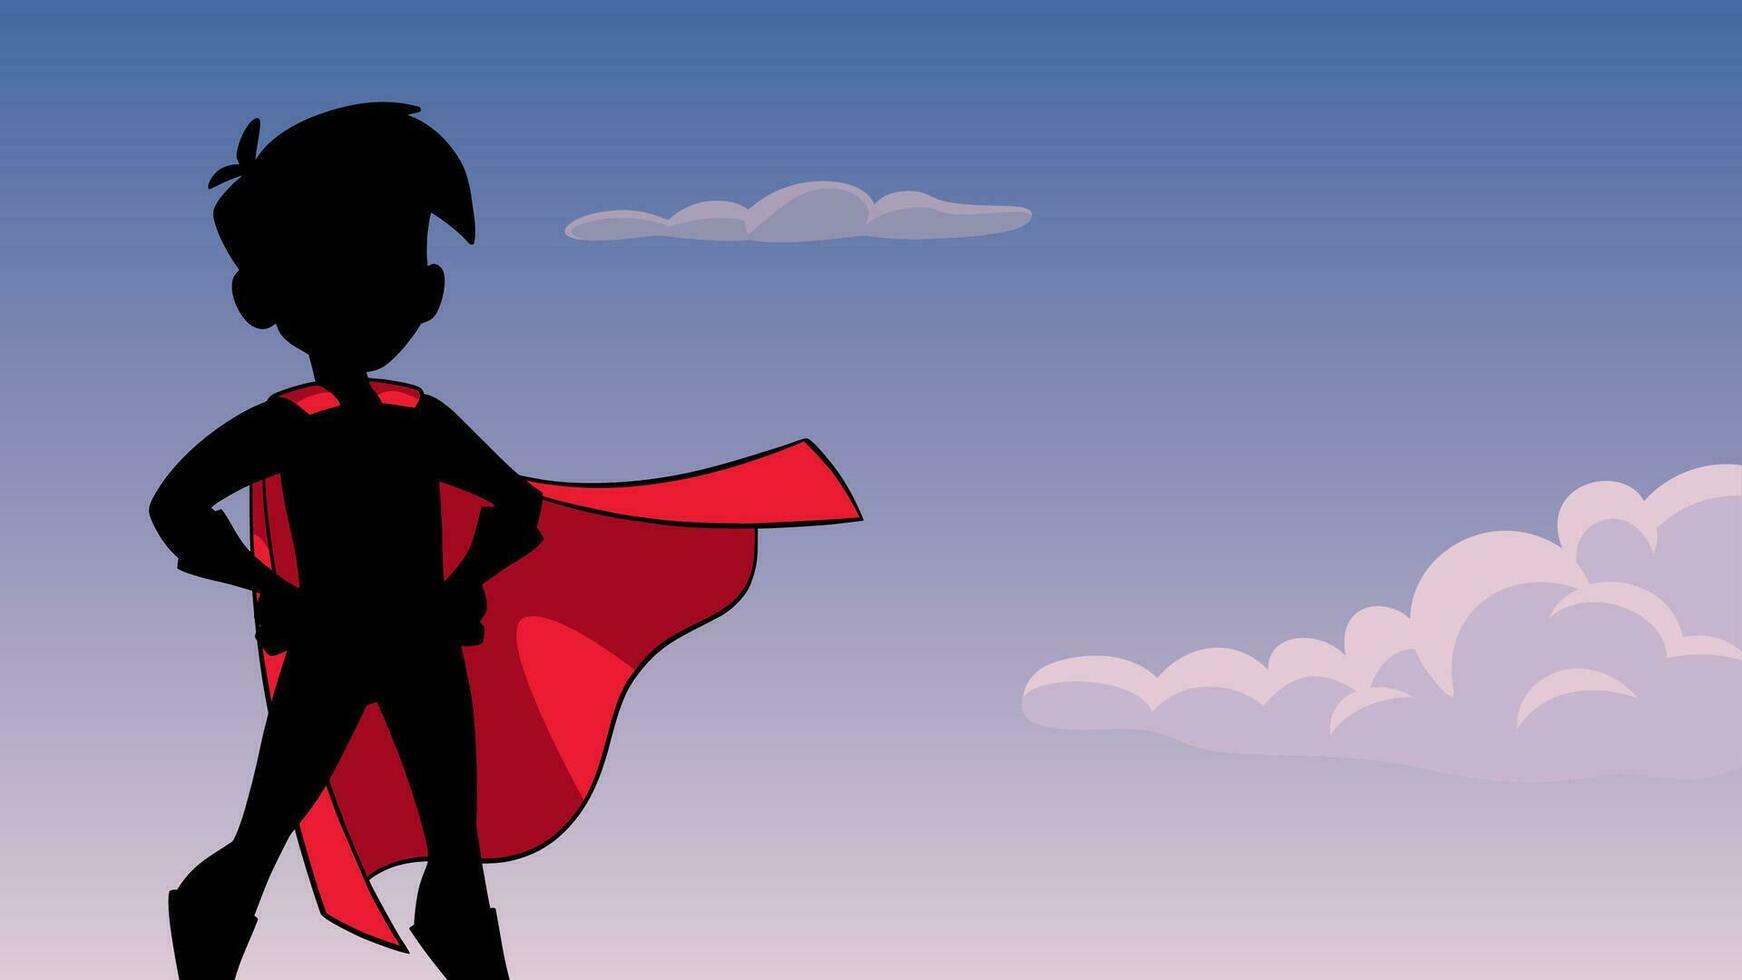 Super Boy Sky Silhouette vector